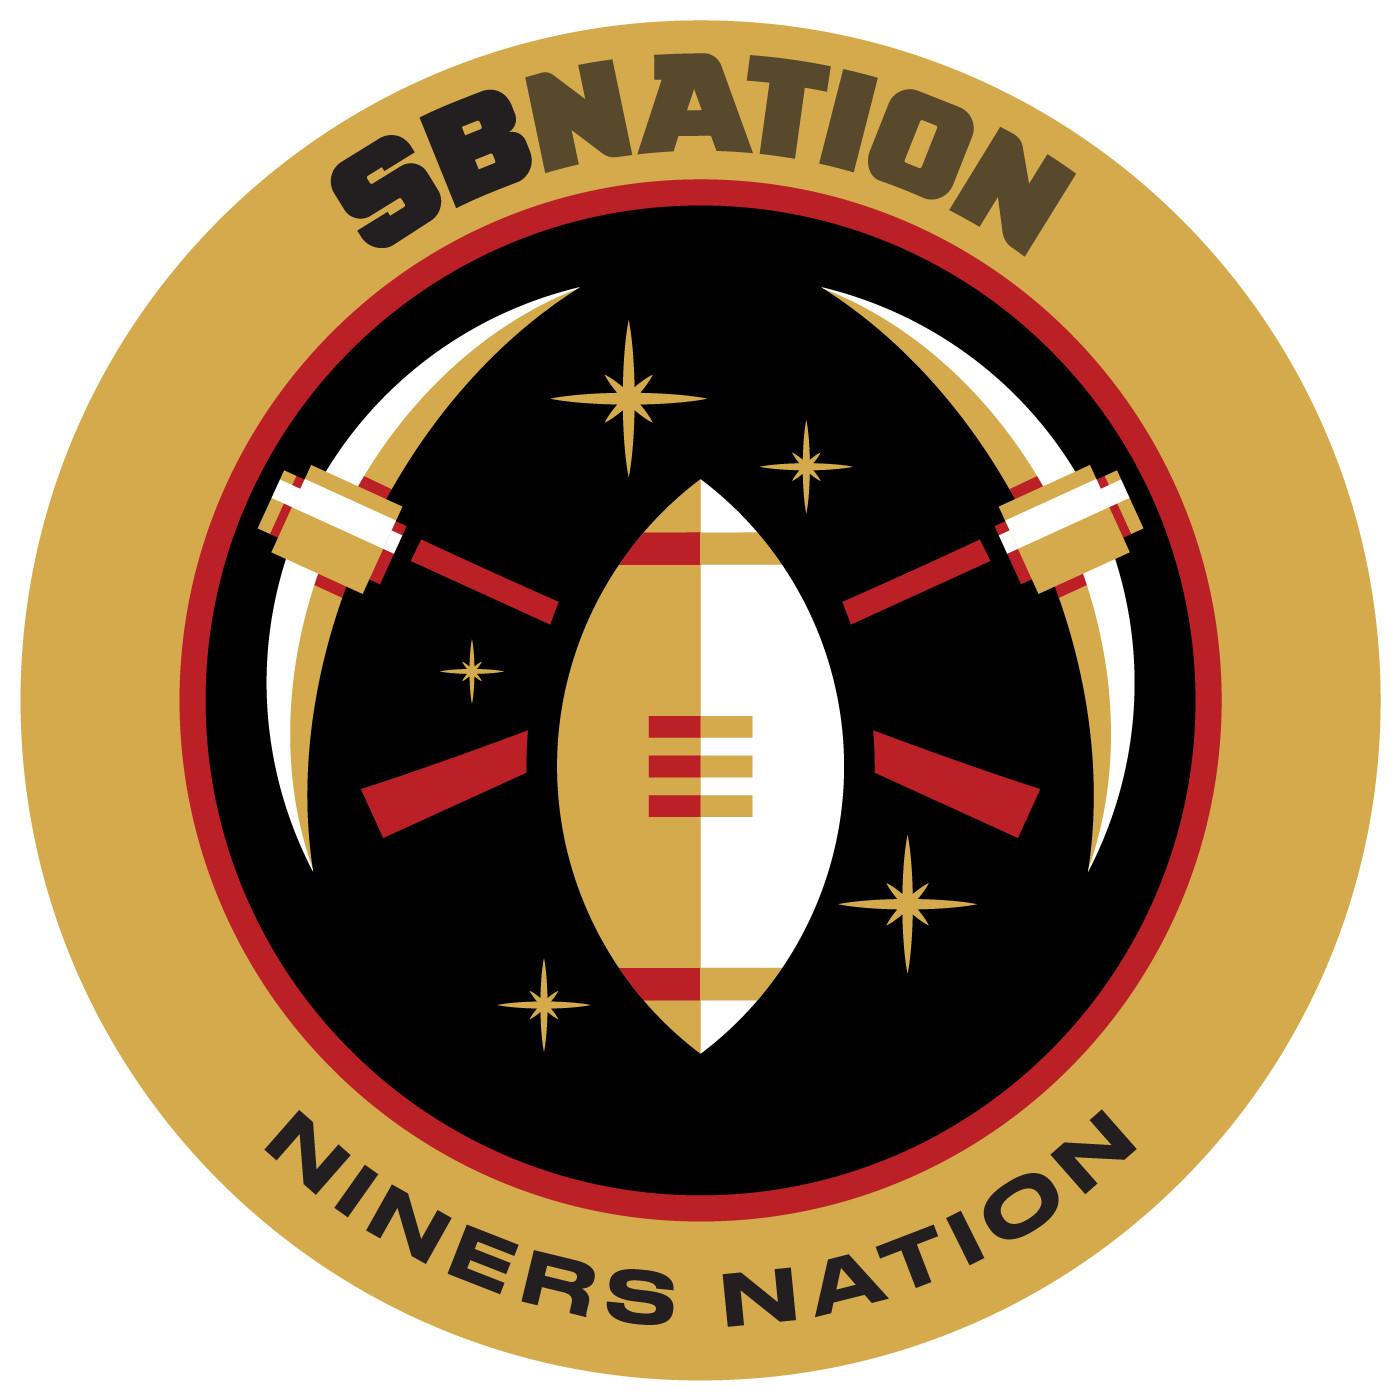 Niners Nation: for San Francisco 49ers fans | Listen via Stitcher for Podcasts